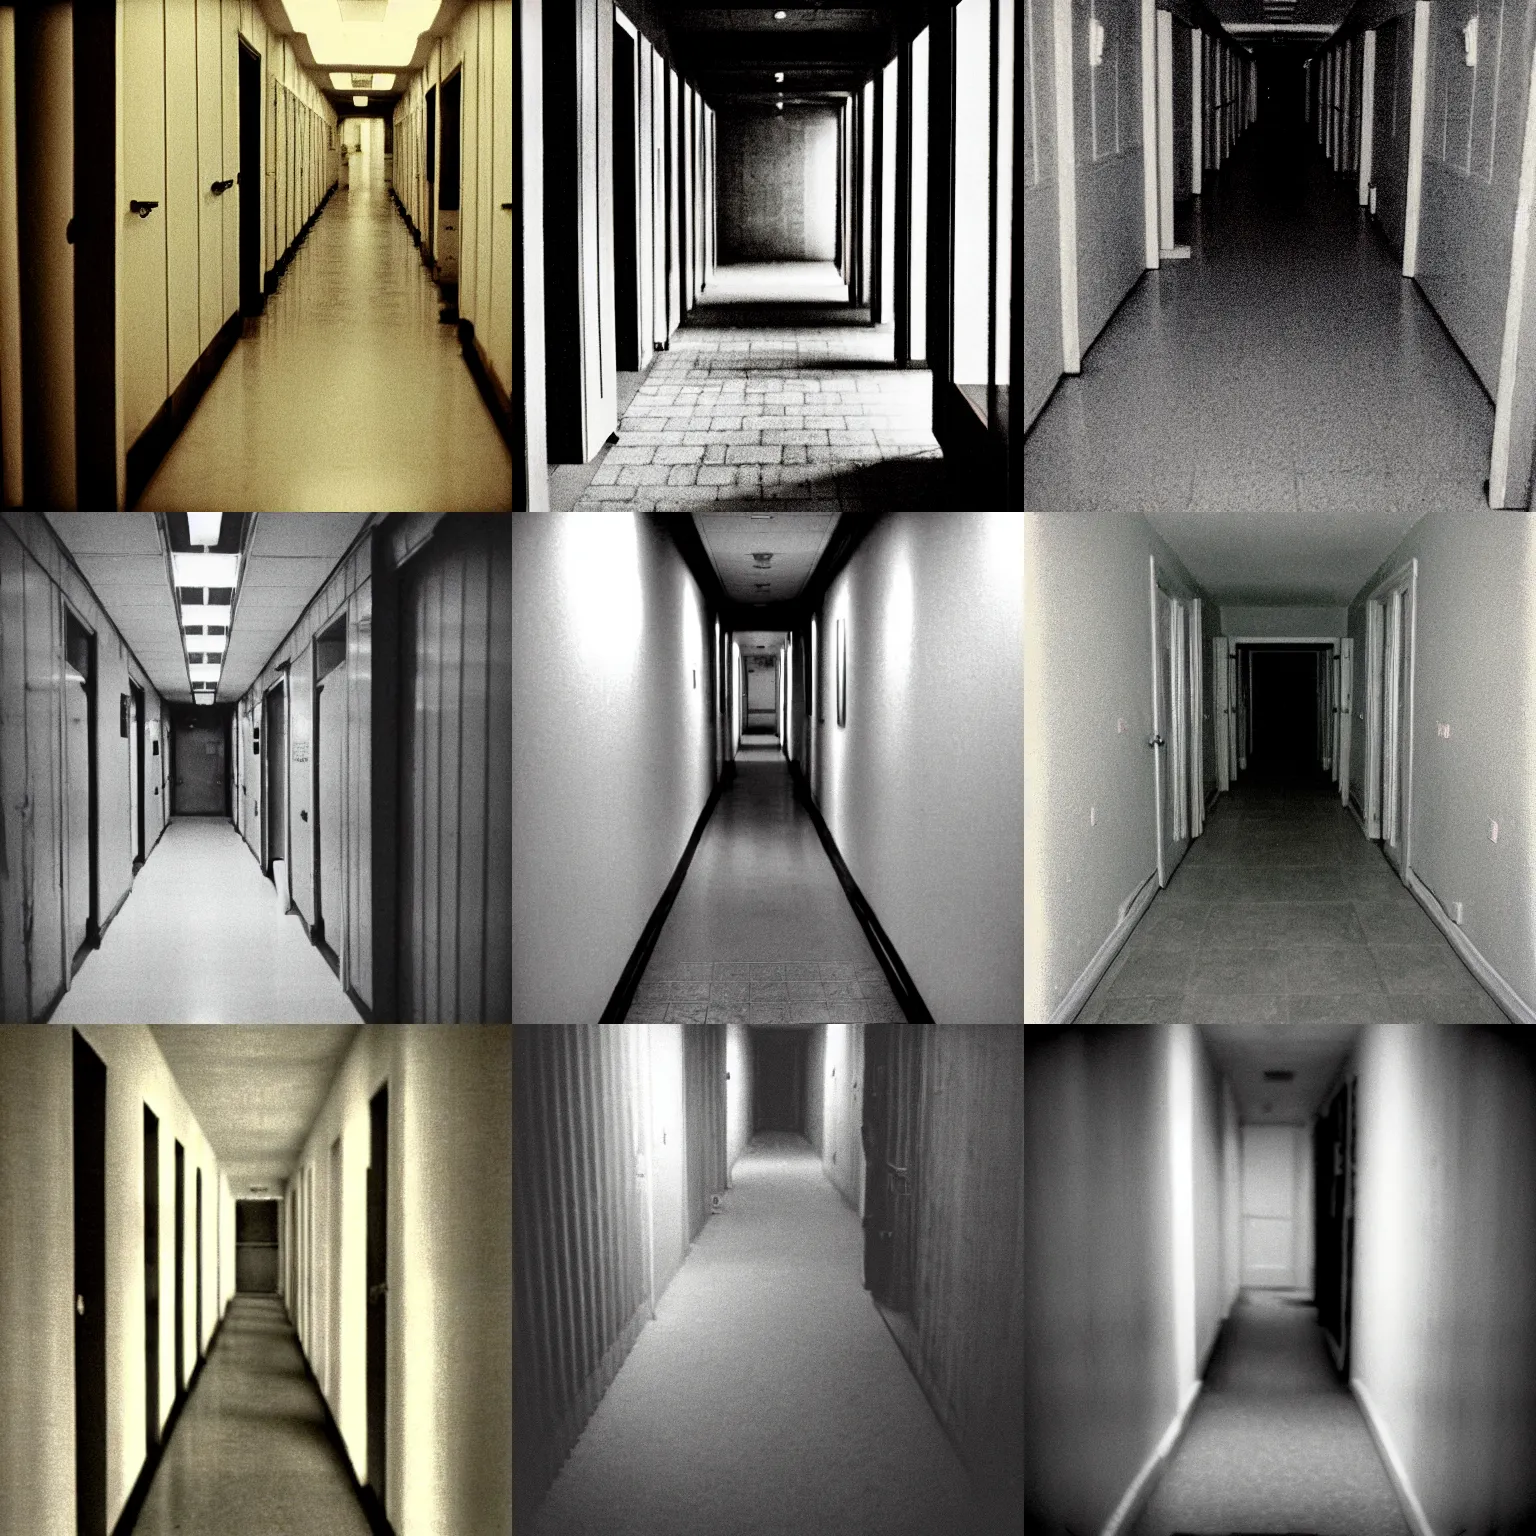 Prompt: endless hallway 1 9 9 0 s kitchen photo film grain noise creepy